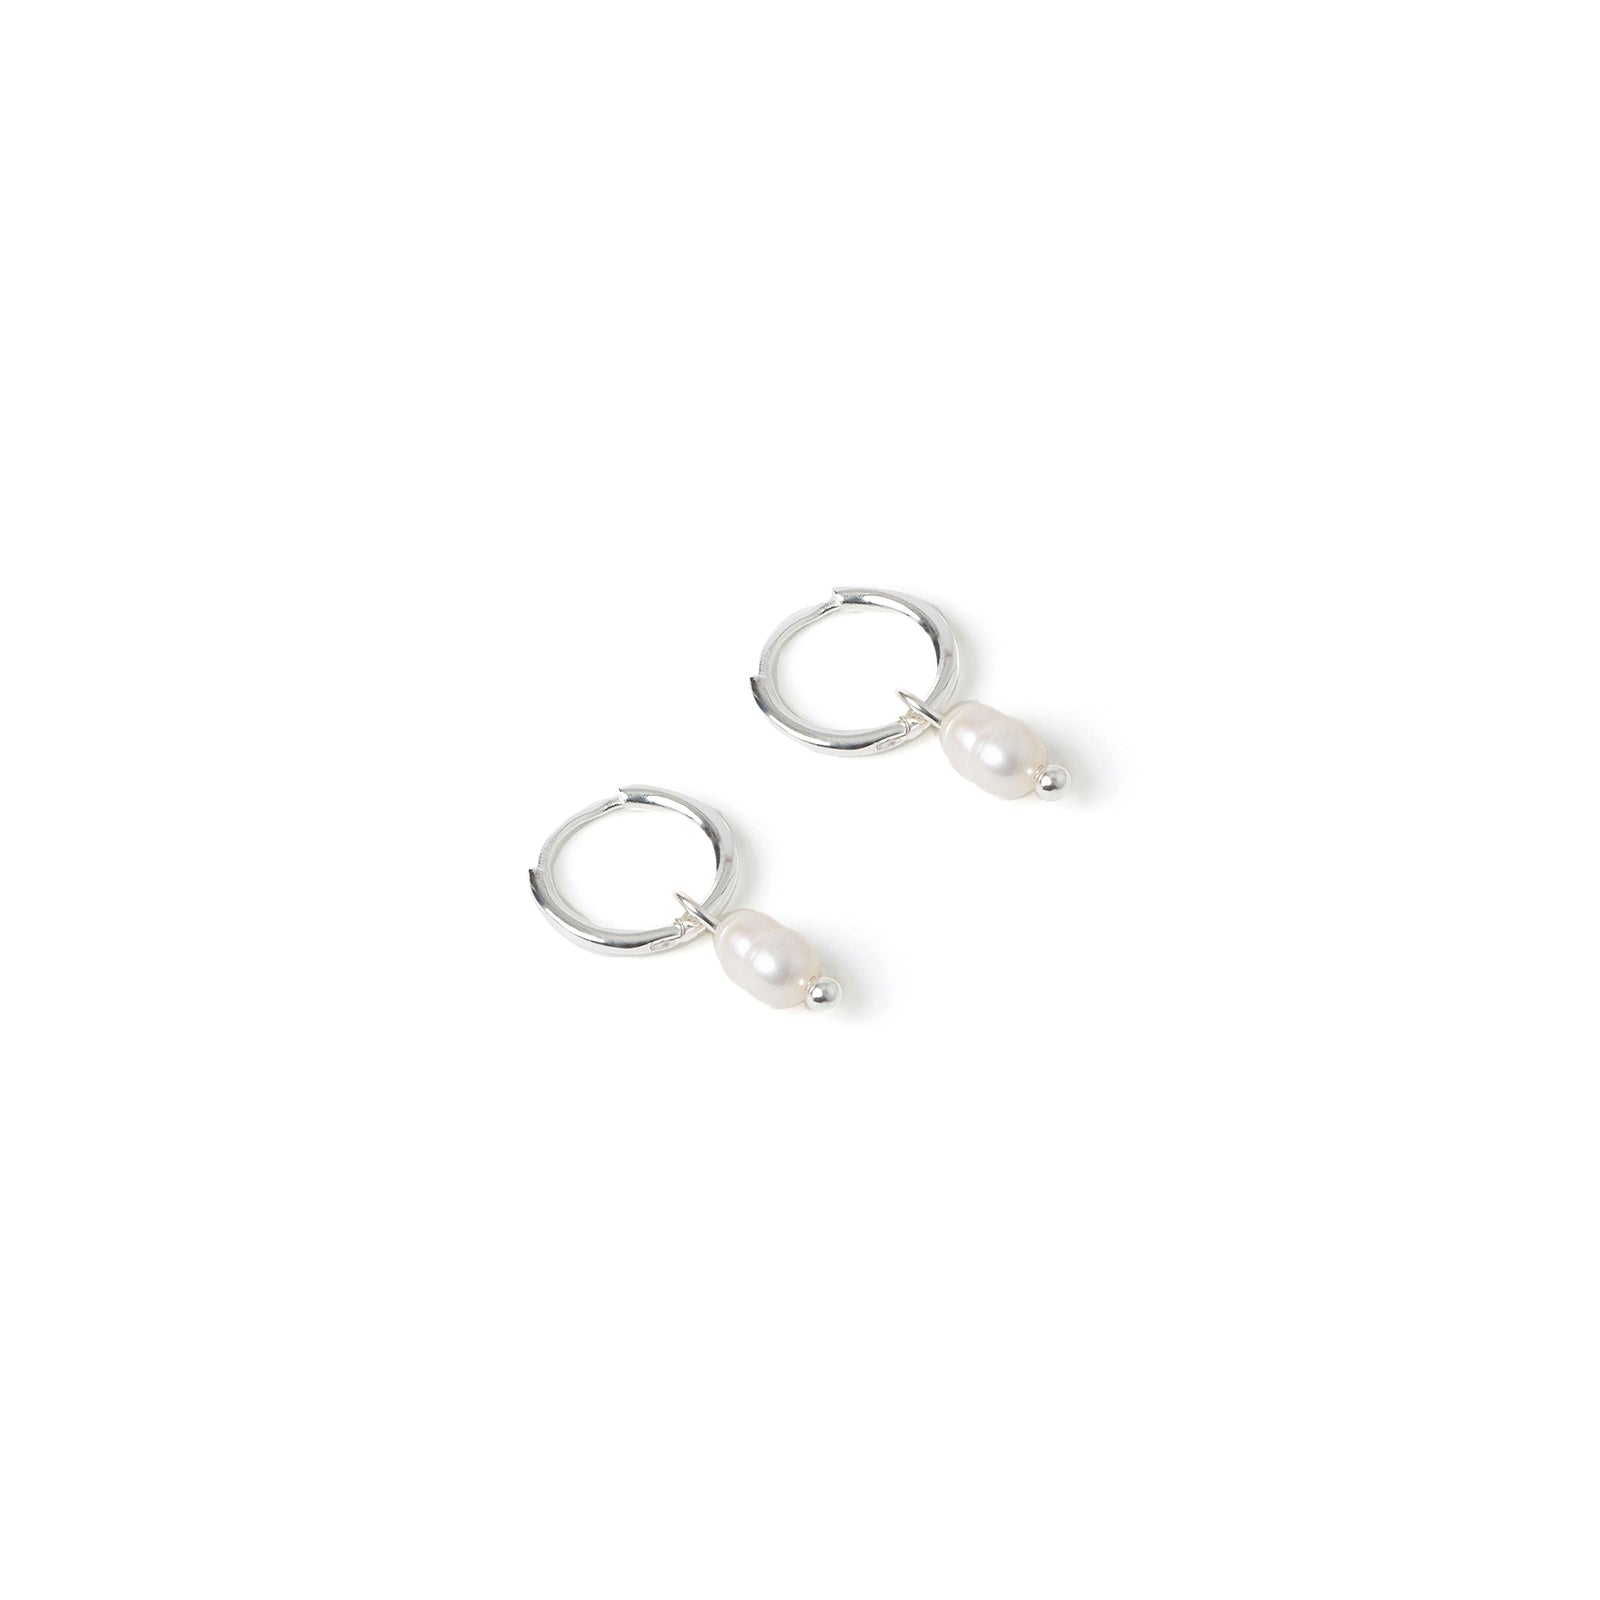 Cordelia Pearl Earrings - Silver